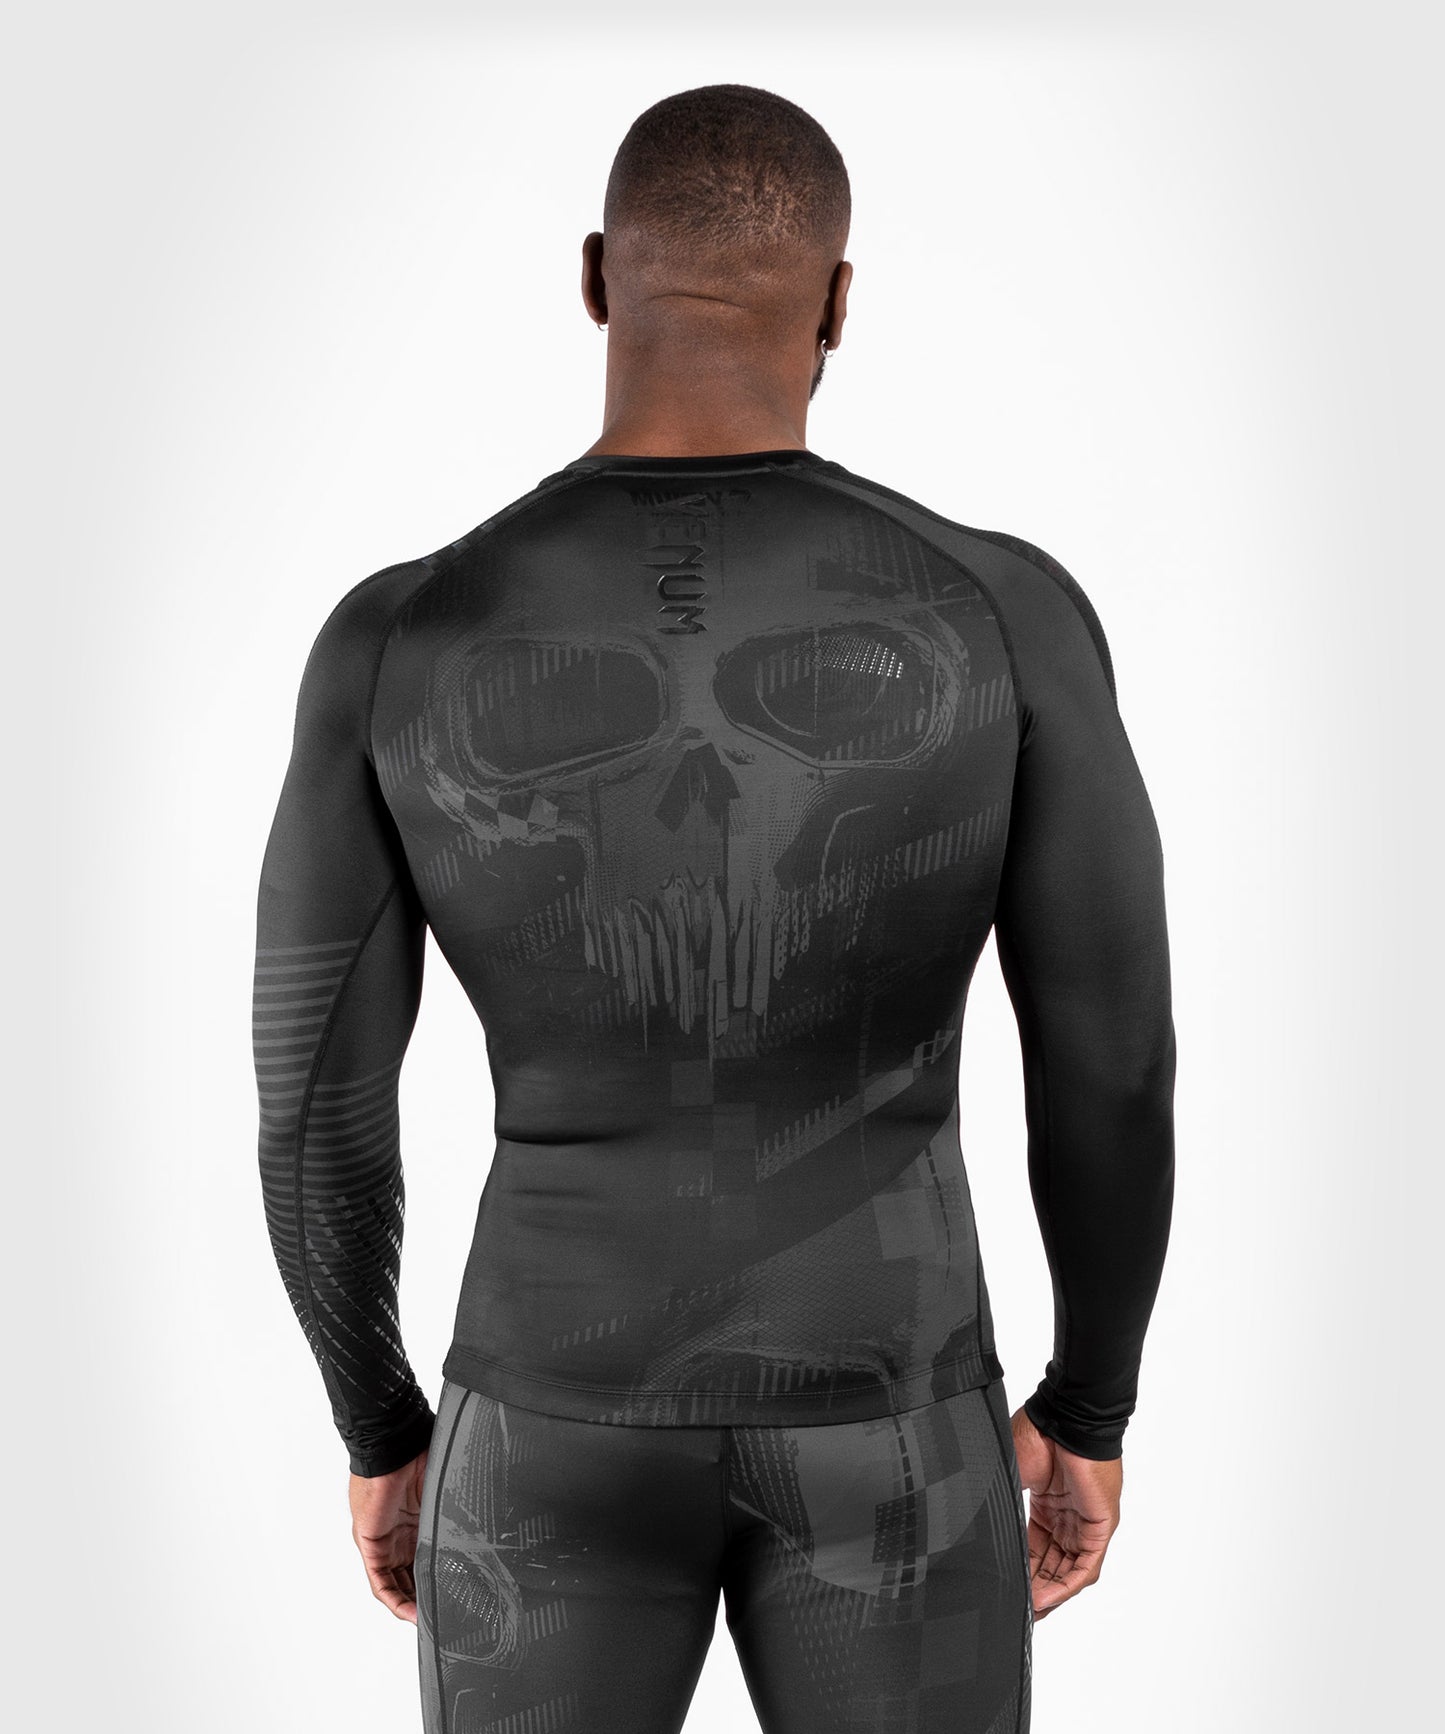 Venum Skull Rashguard - Long sleeves - Black/Black